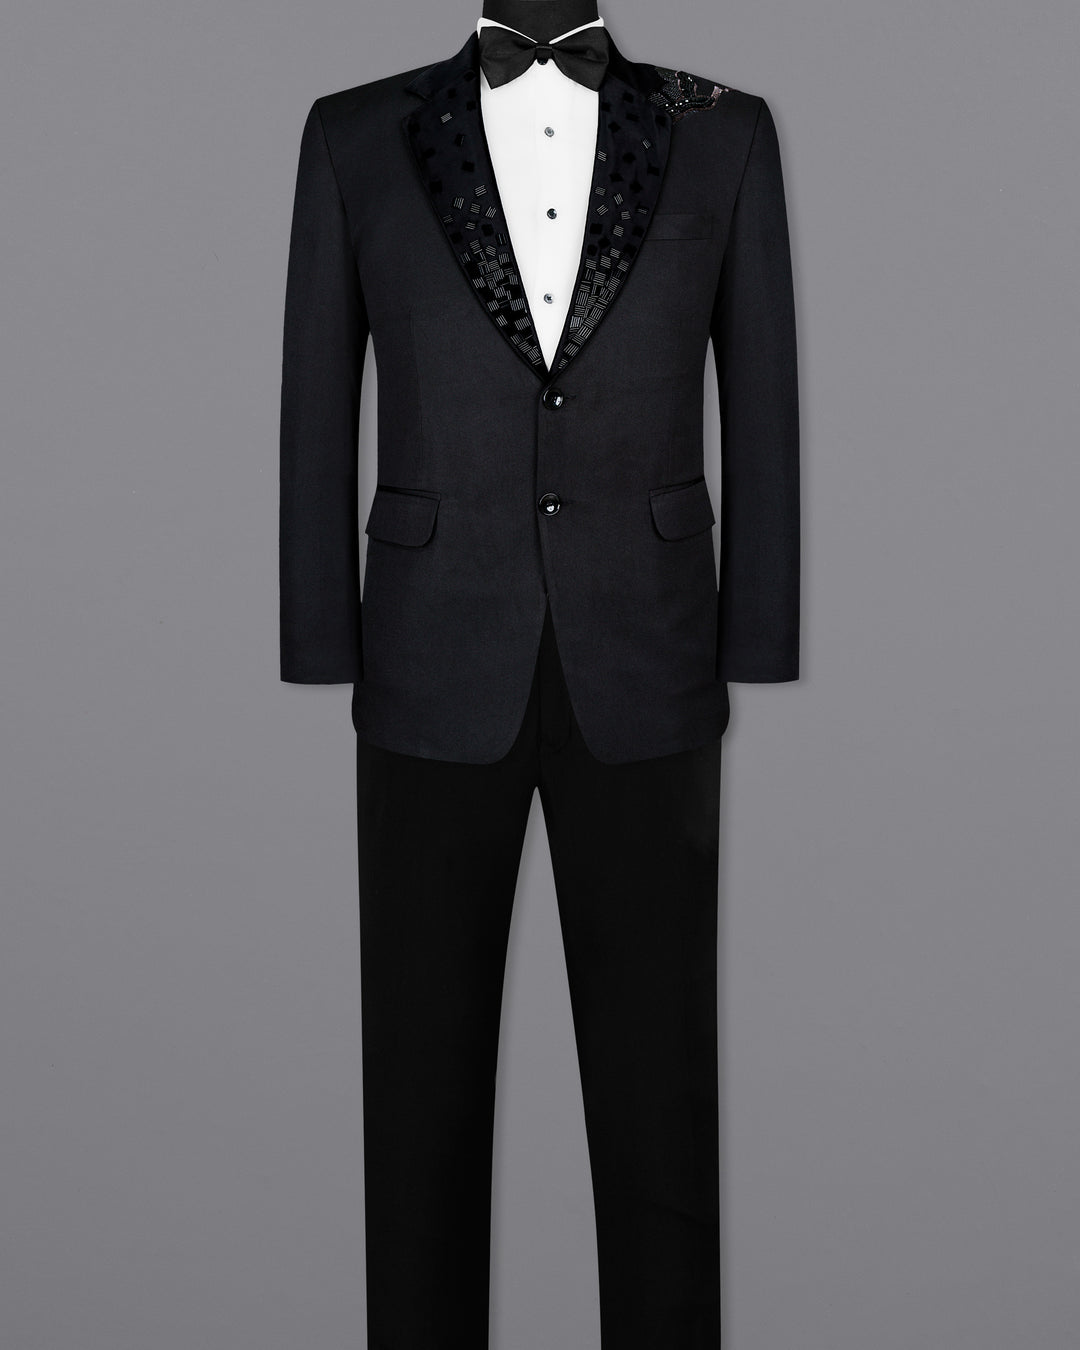 Printed tuxedo suits